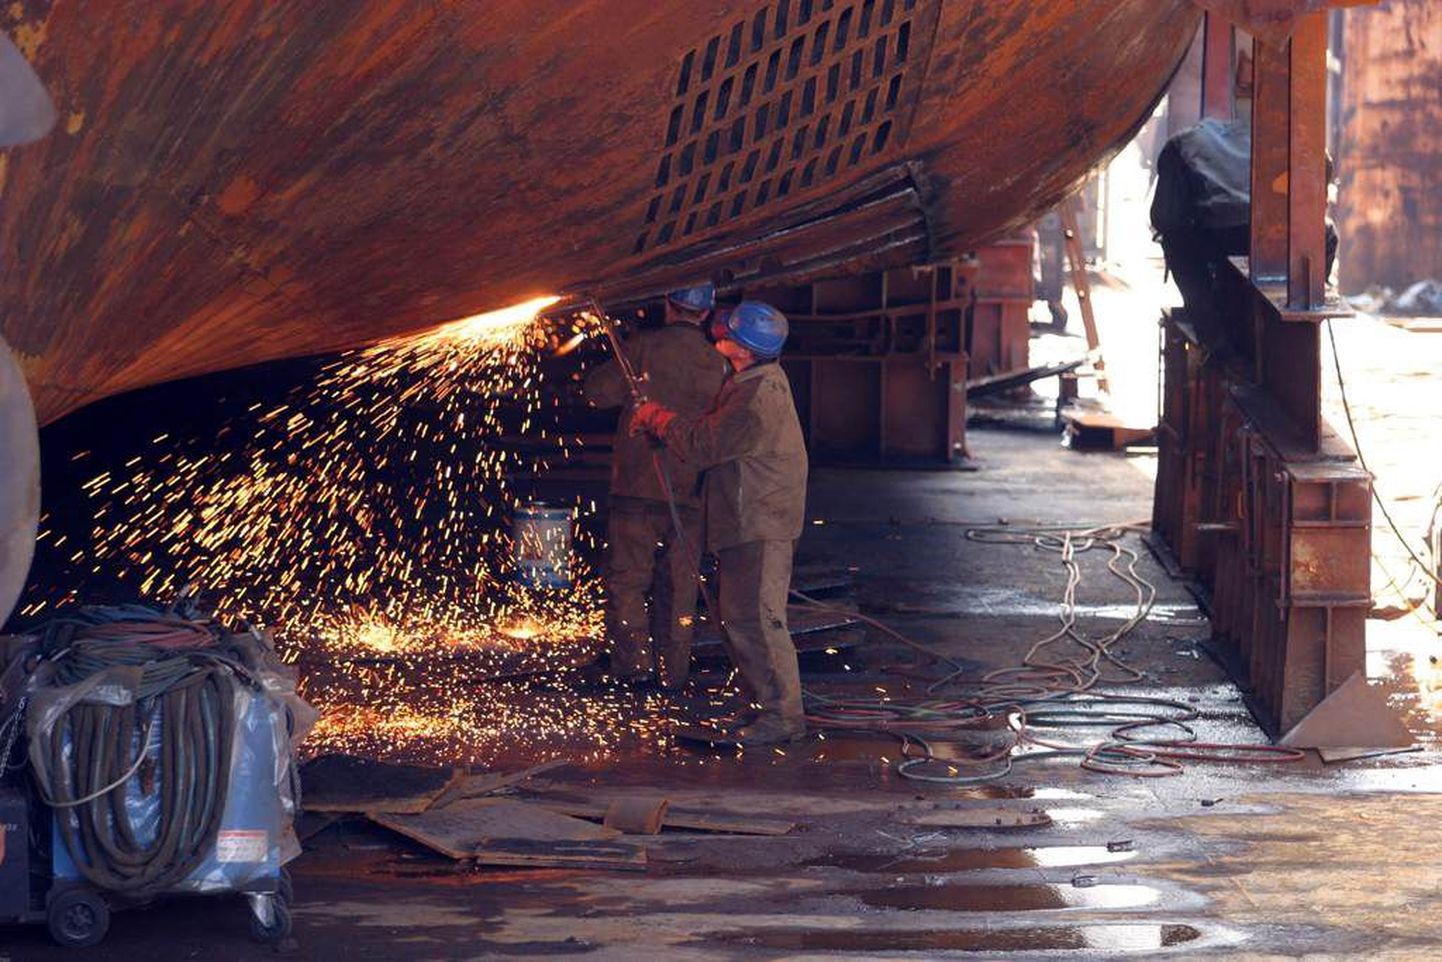 BLRT töötajad remontimas kuivdokis asuvat laeva